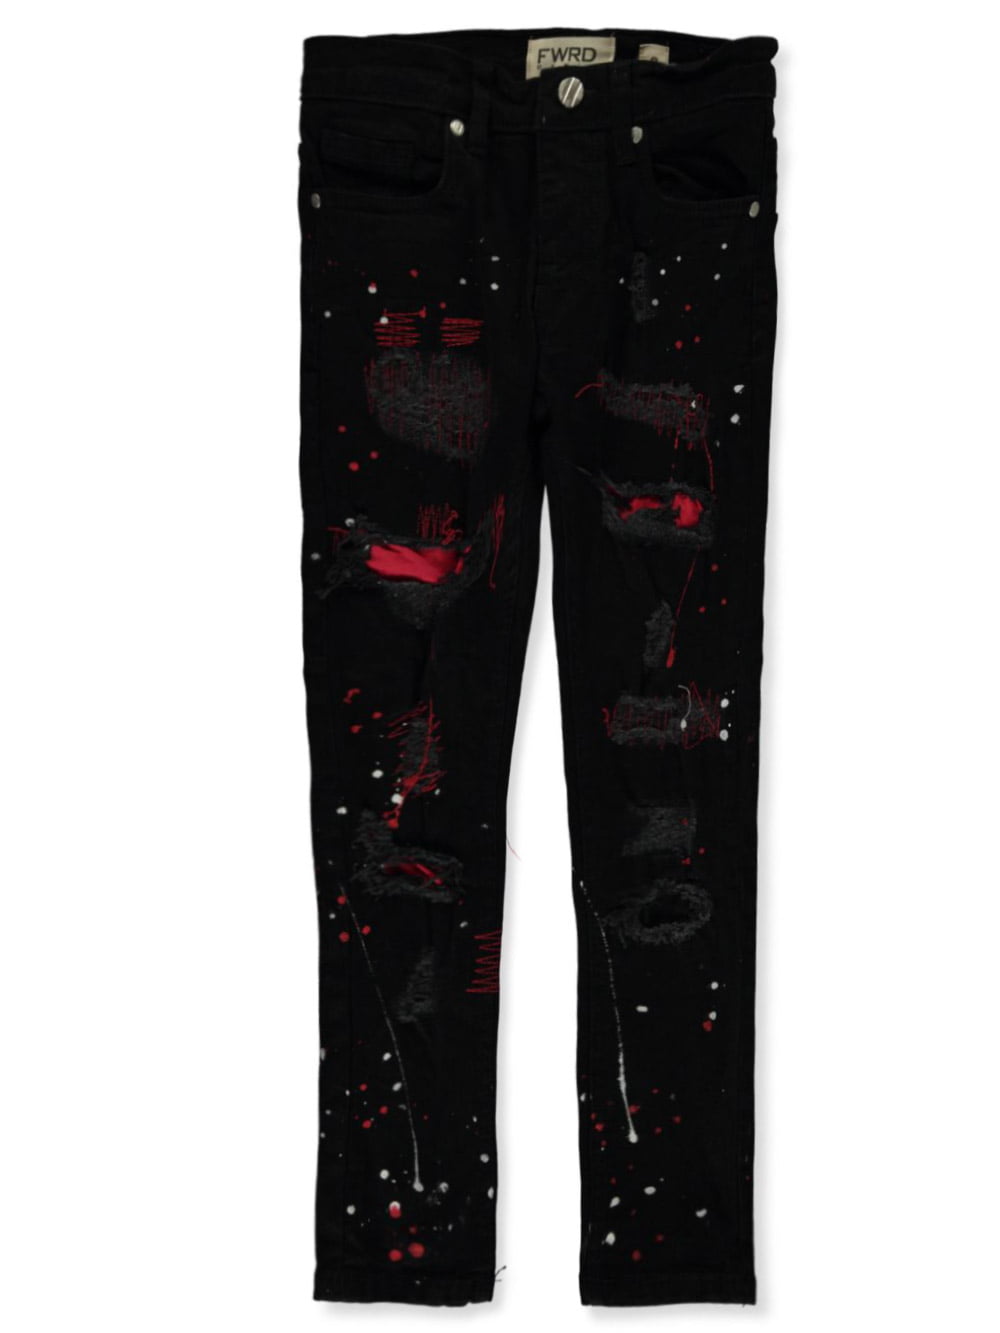 FWRD Boys' Paint Drip Jeans - jet black, 4 (Little Boys) - Walmart.com